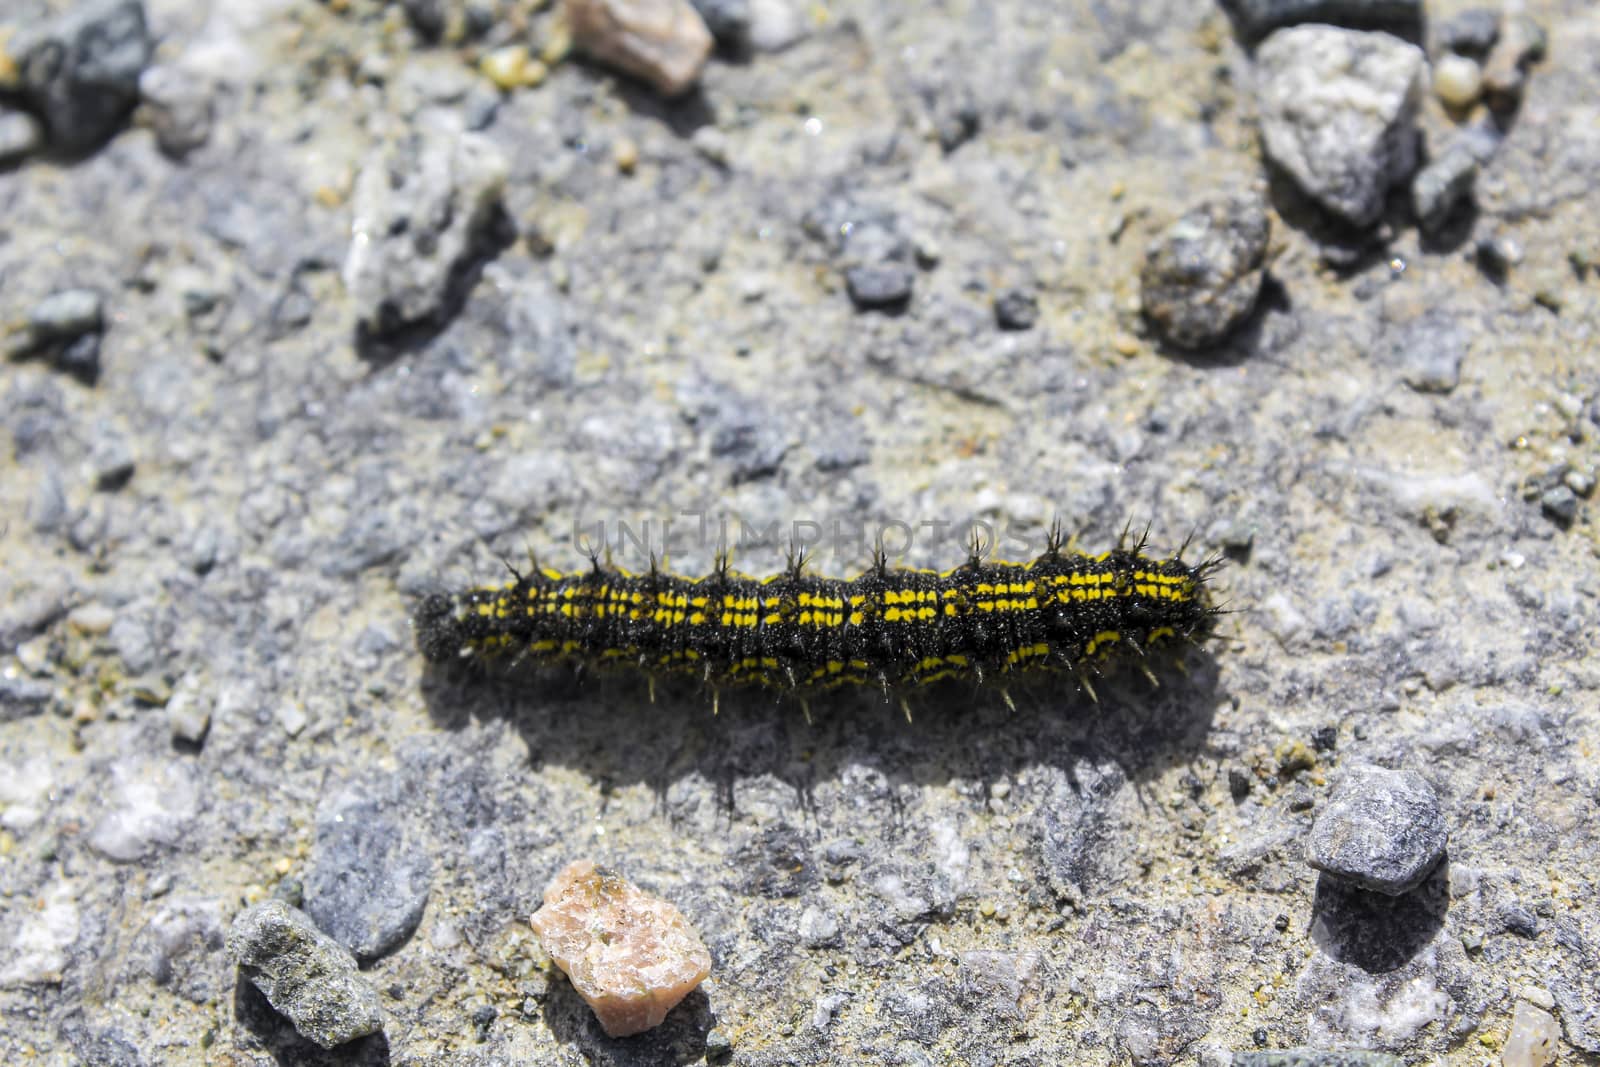 Black and yellow hairy caterpillar on stony ground in Hemsedal, Viken, Norway.